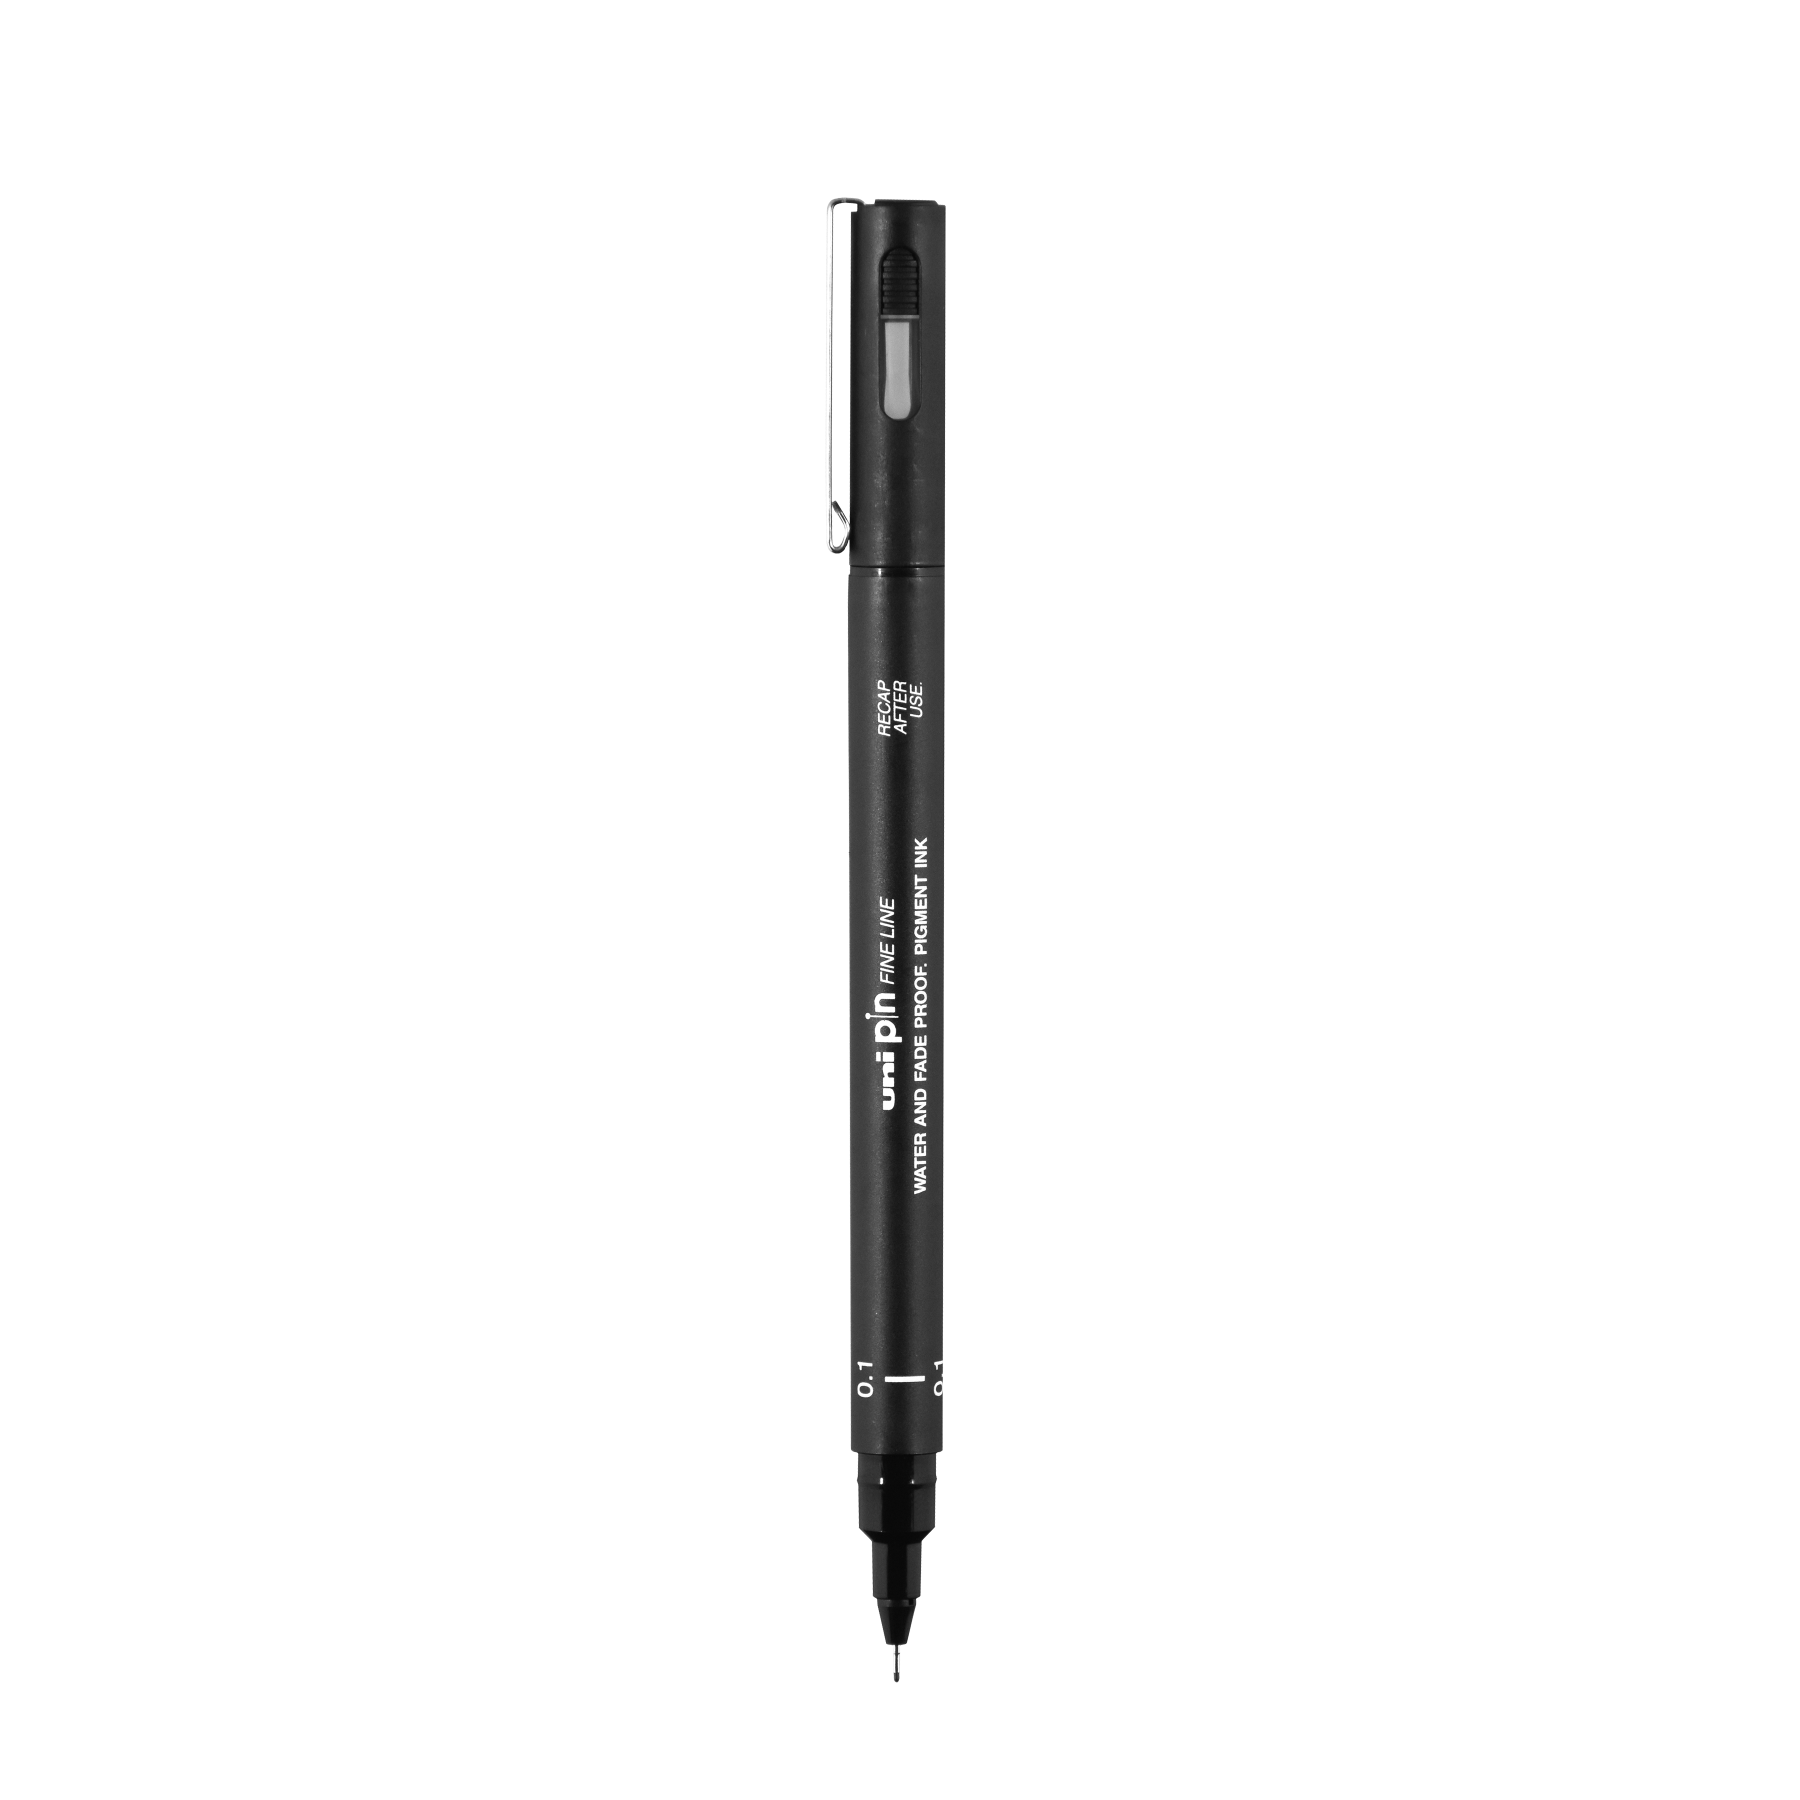 uni® Pin, Fine Line Drawing Pen (0.1mm)